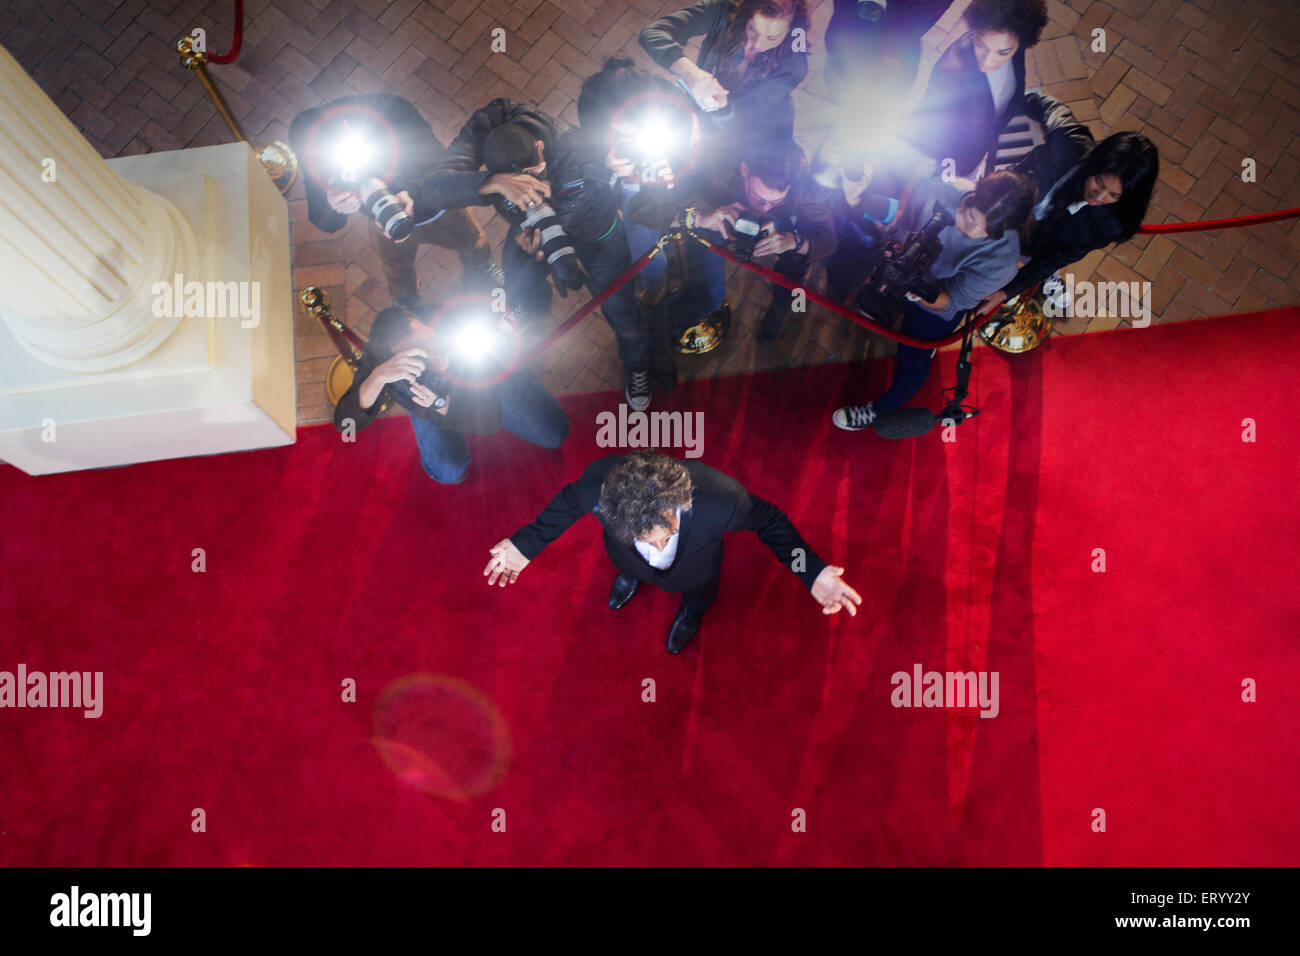 Paparazzi-Fotografen fotografieren Prominente am roten Teppich Stockfoto